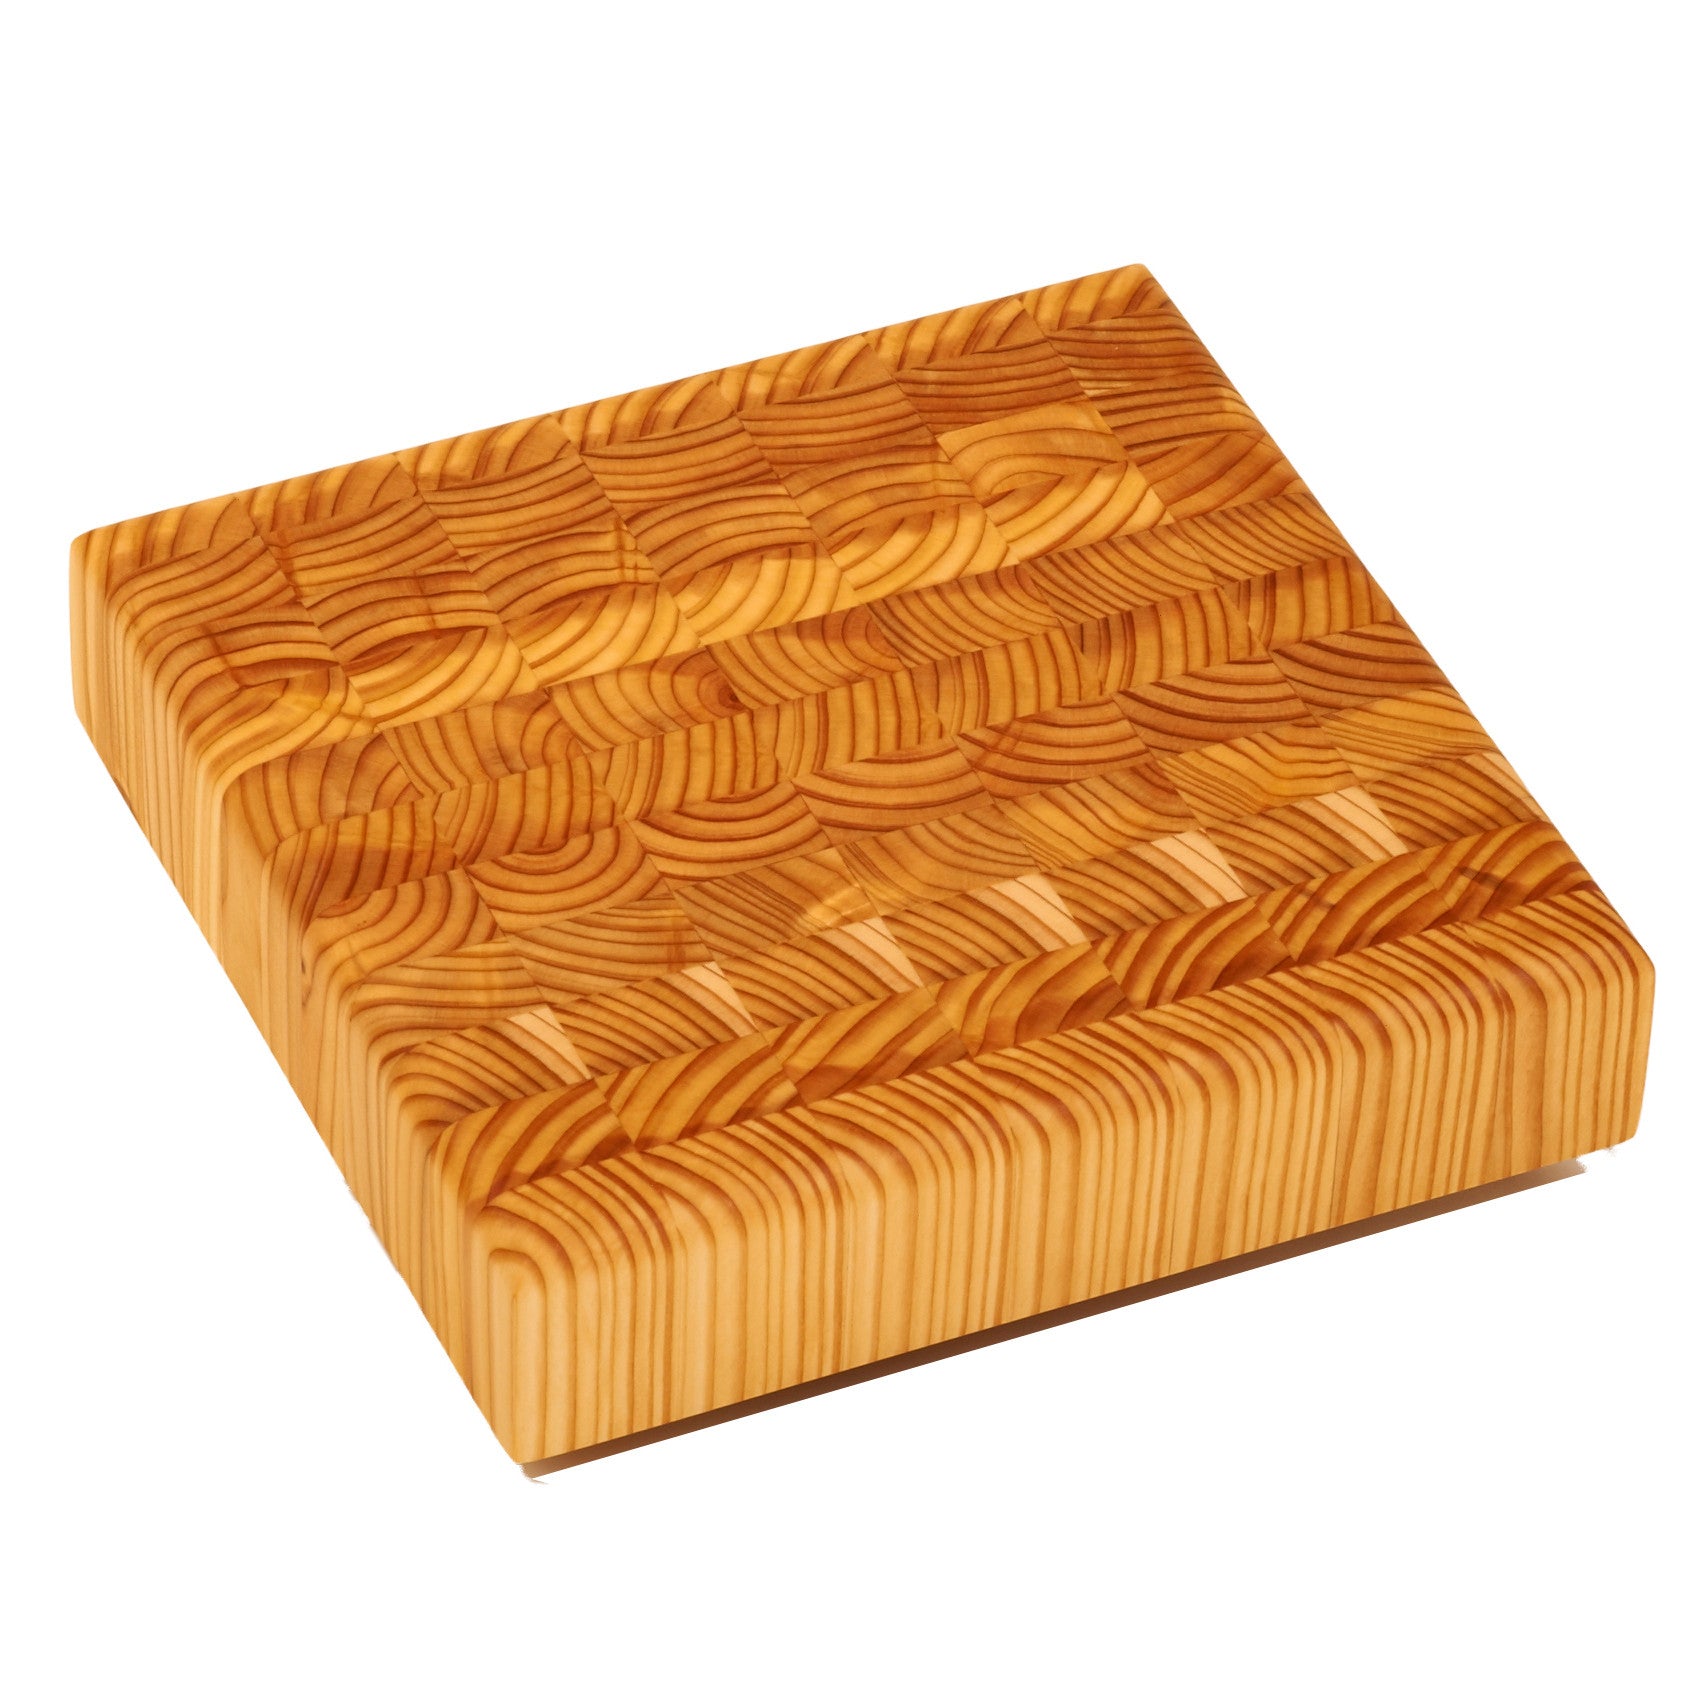 Larch Wood Large Classic End Grain Cutting Board 21.5 x 13.5 x 1.75